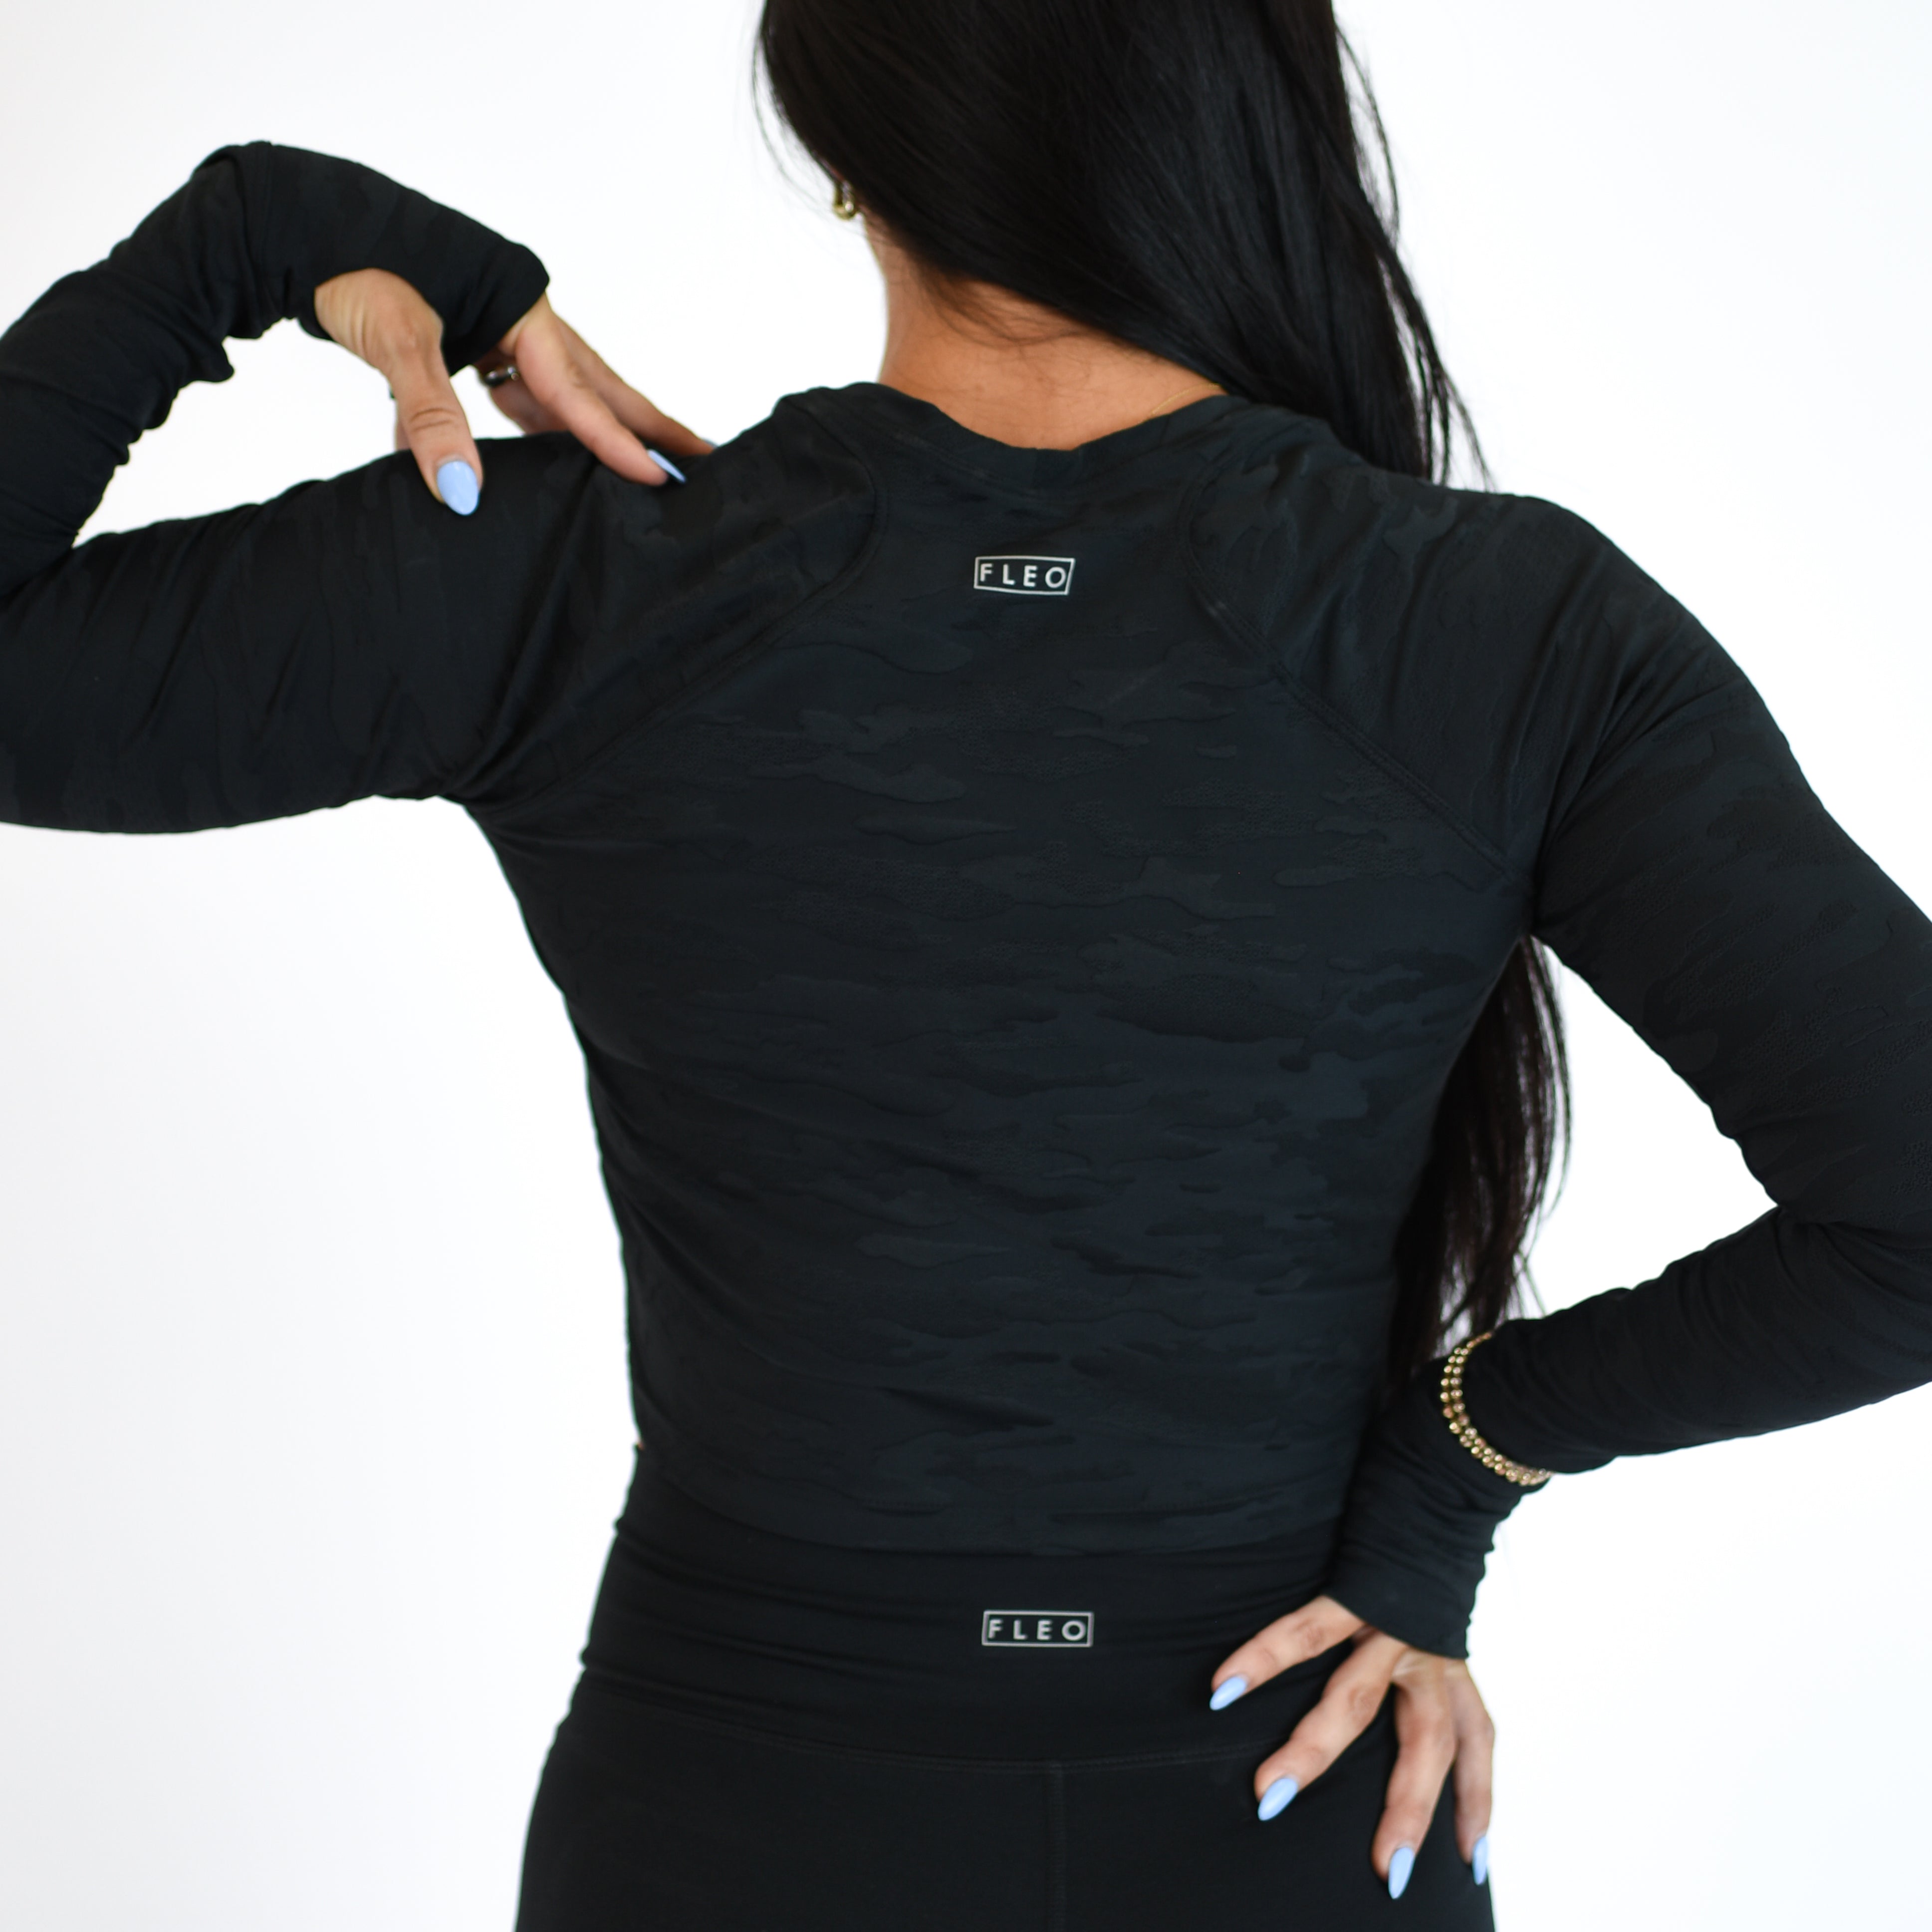 Black Pointelle Women's Long Sleeve Shirt - Cropped - Foundation